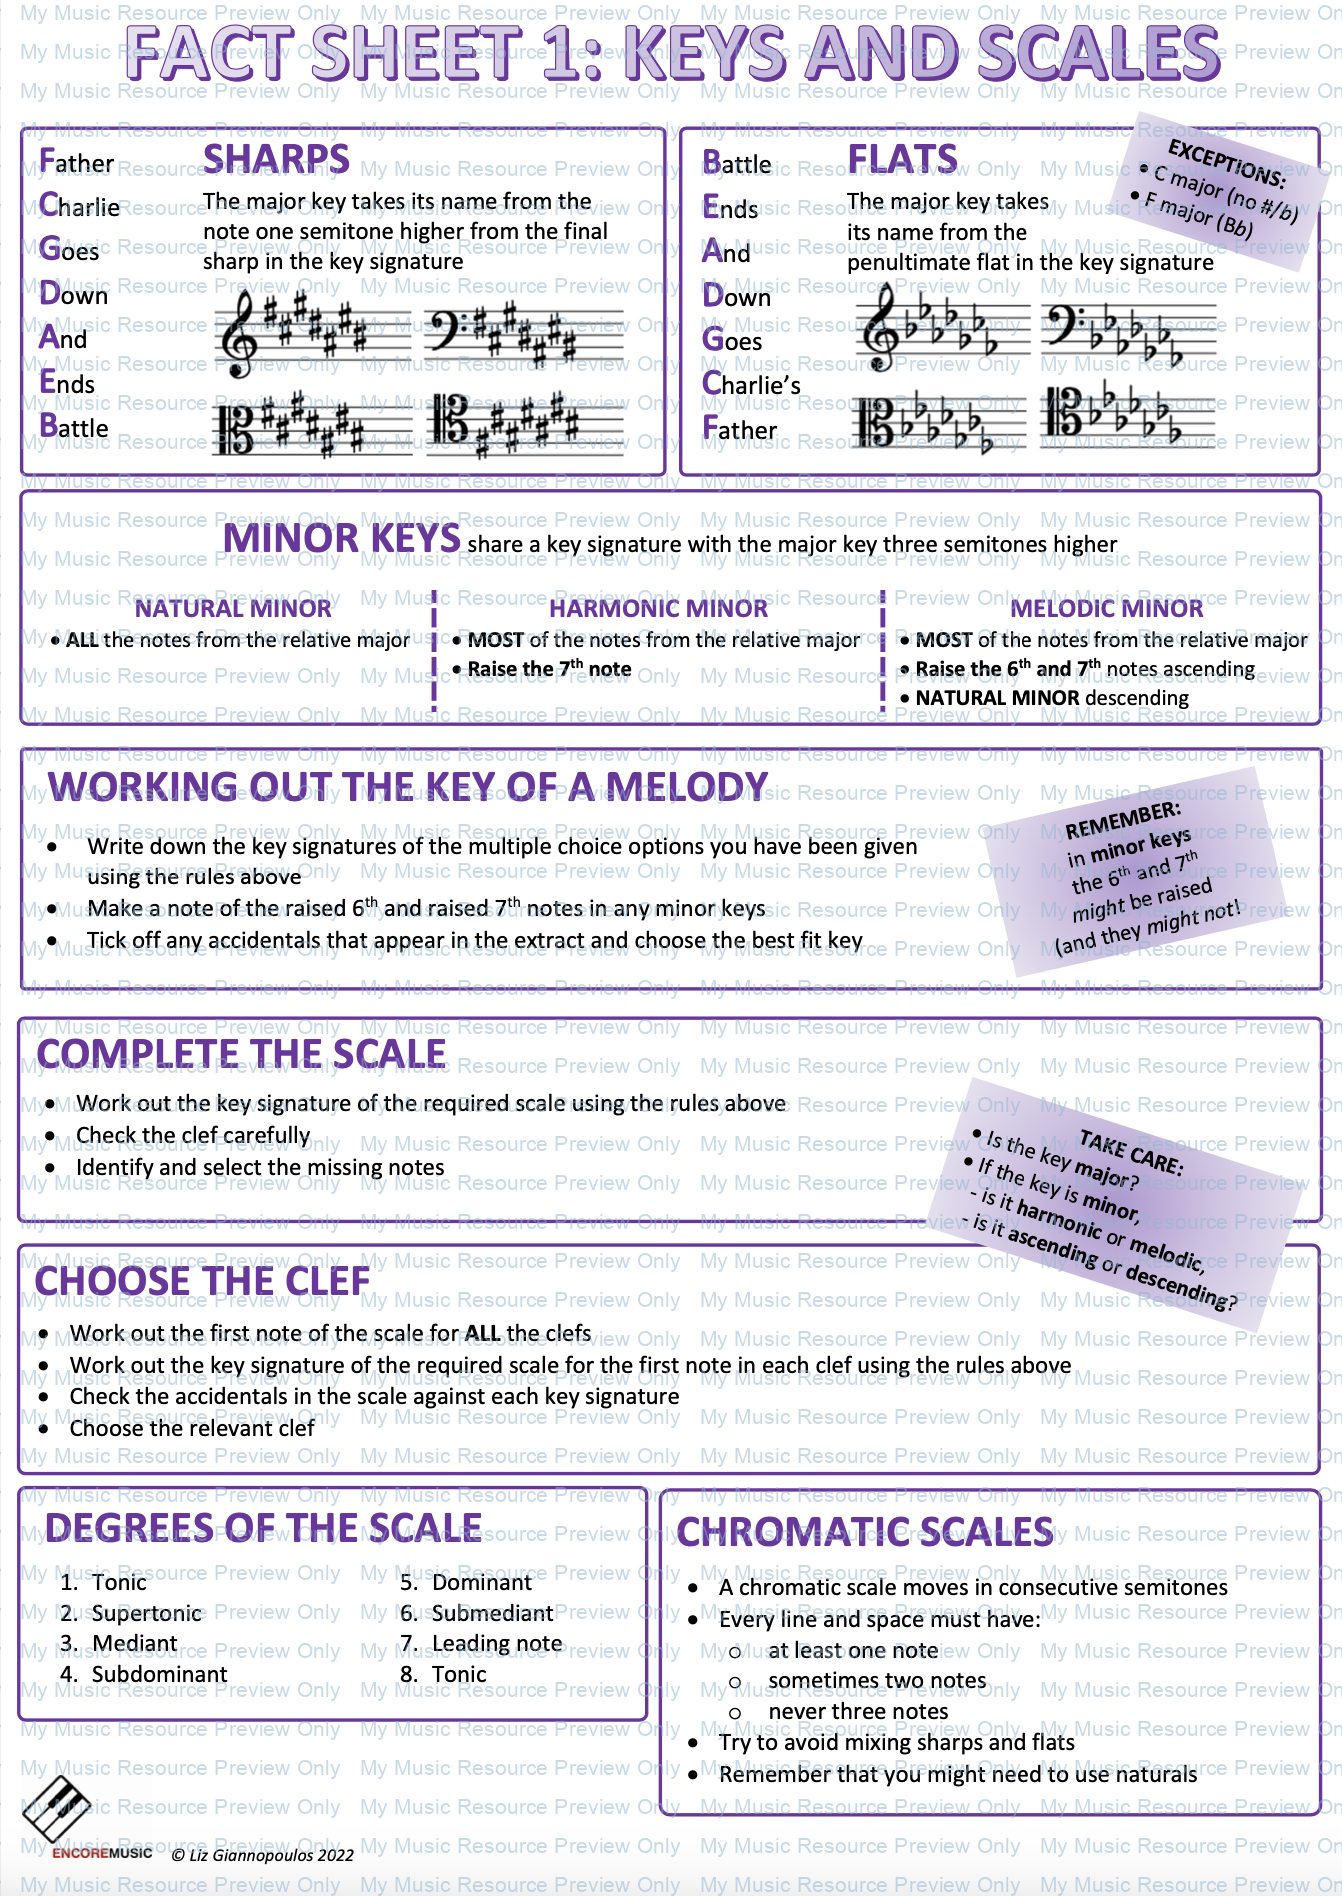 Keys and Scales Fact Sheet